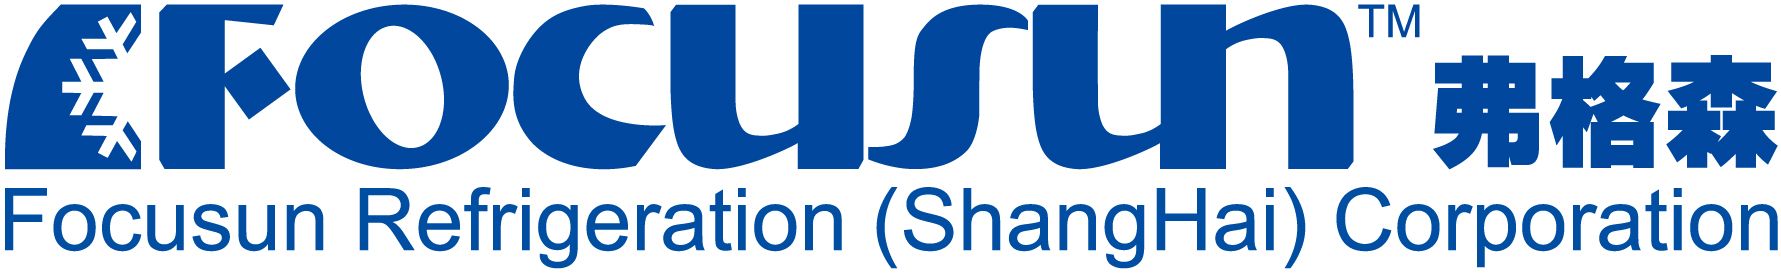 Focusun Refrigeration (Shanghai) Co., Ltd. logo